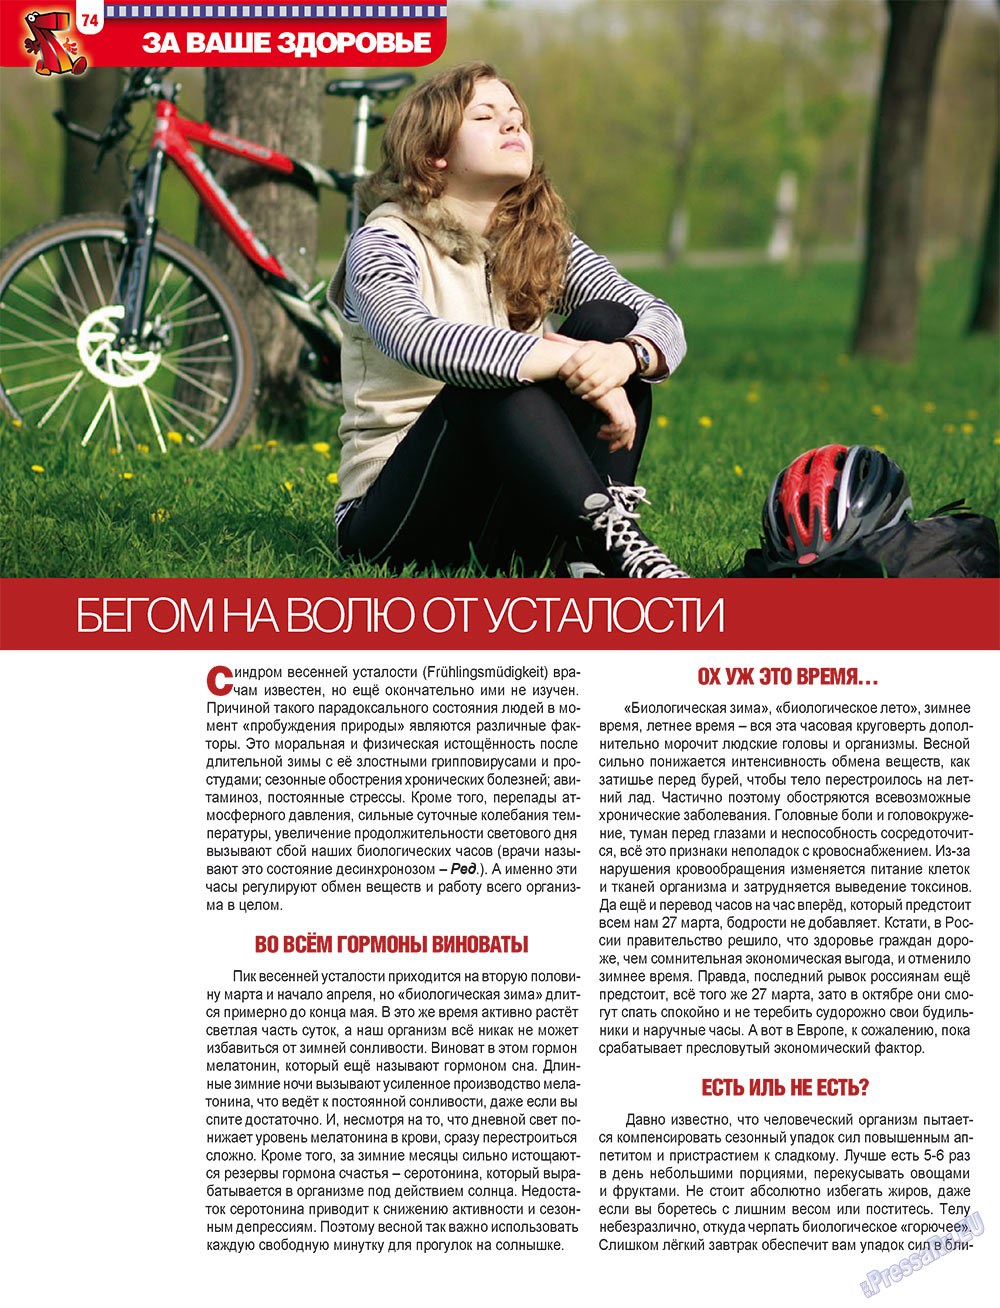 7плюс7я (журнал). 2011 год, номер 12, стр. 74